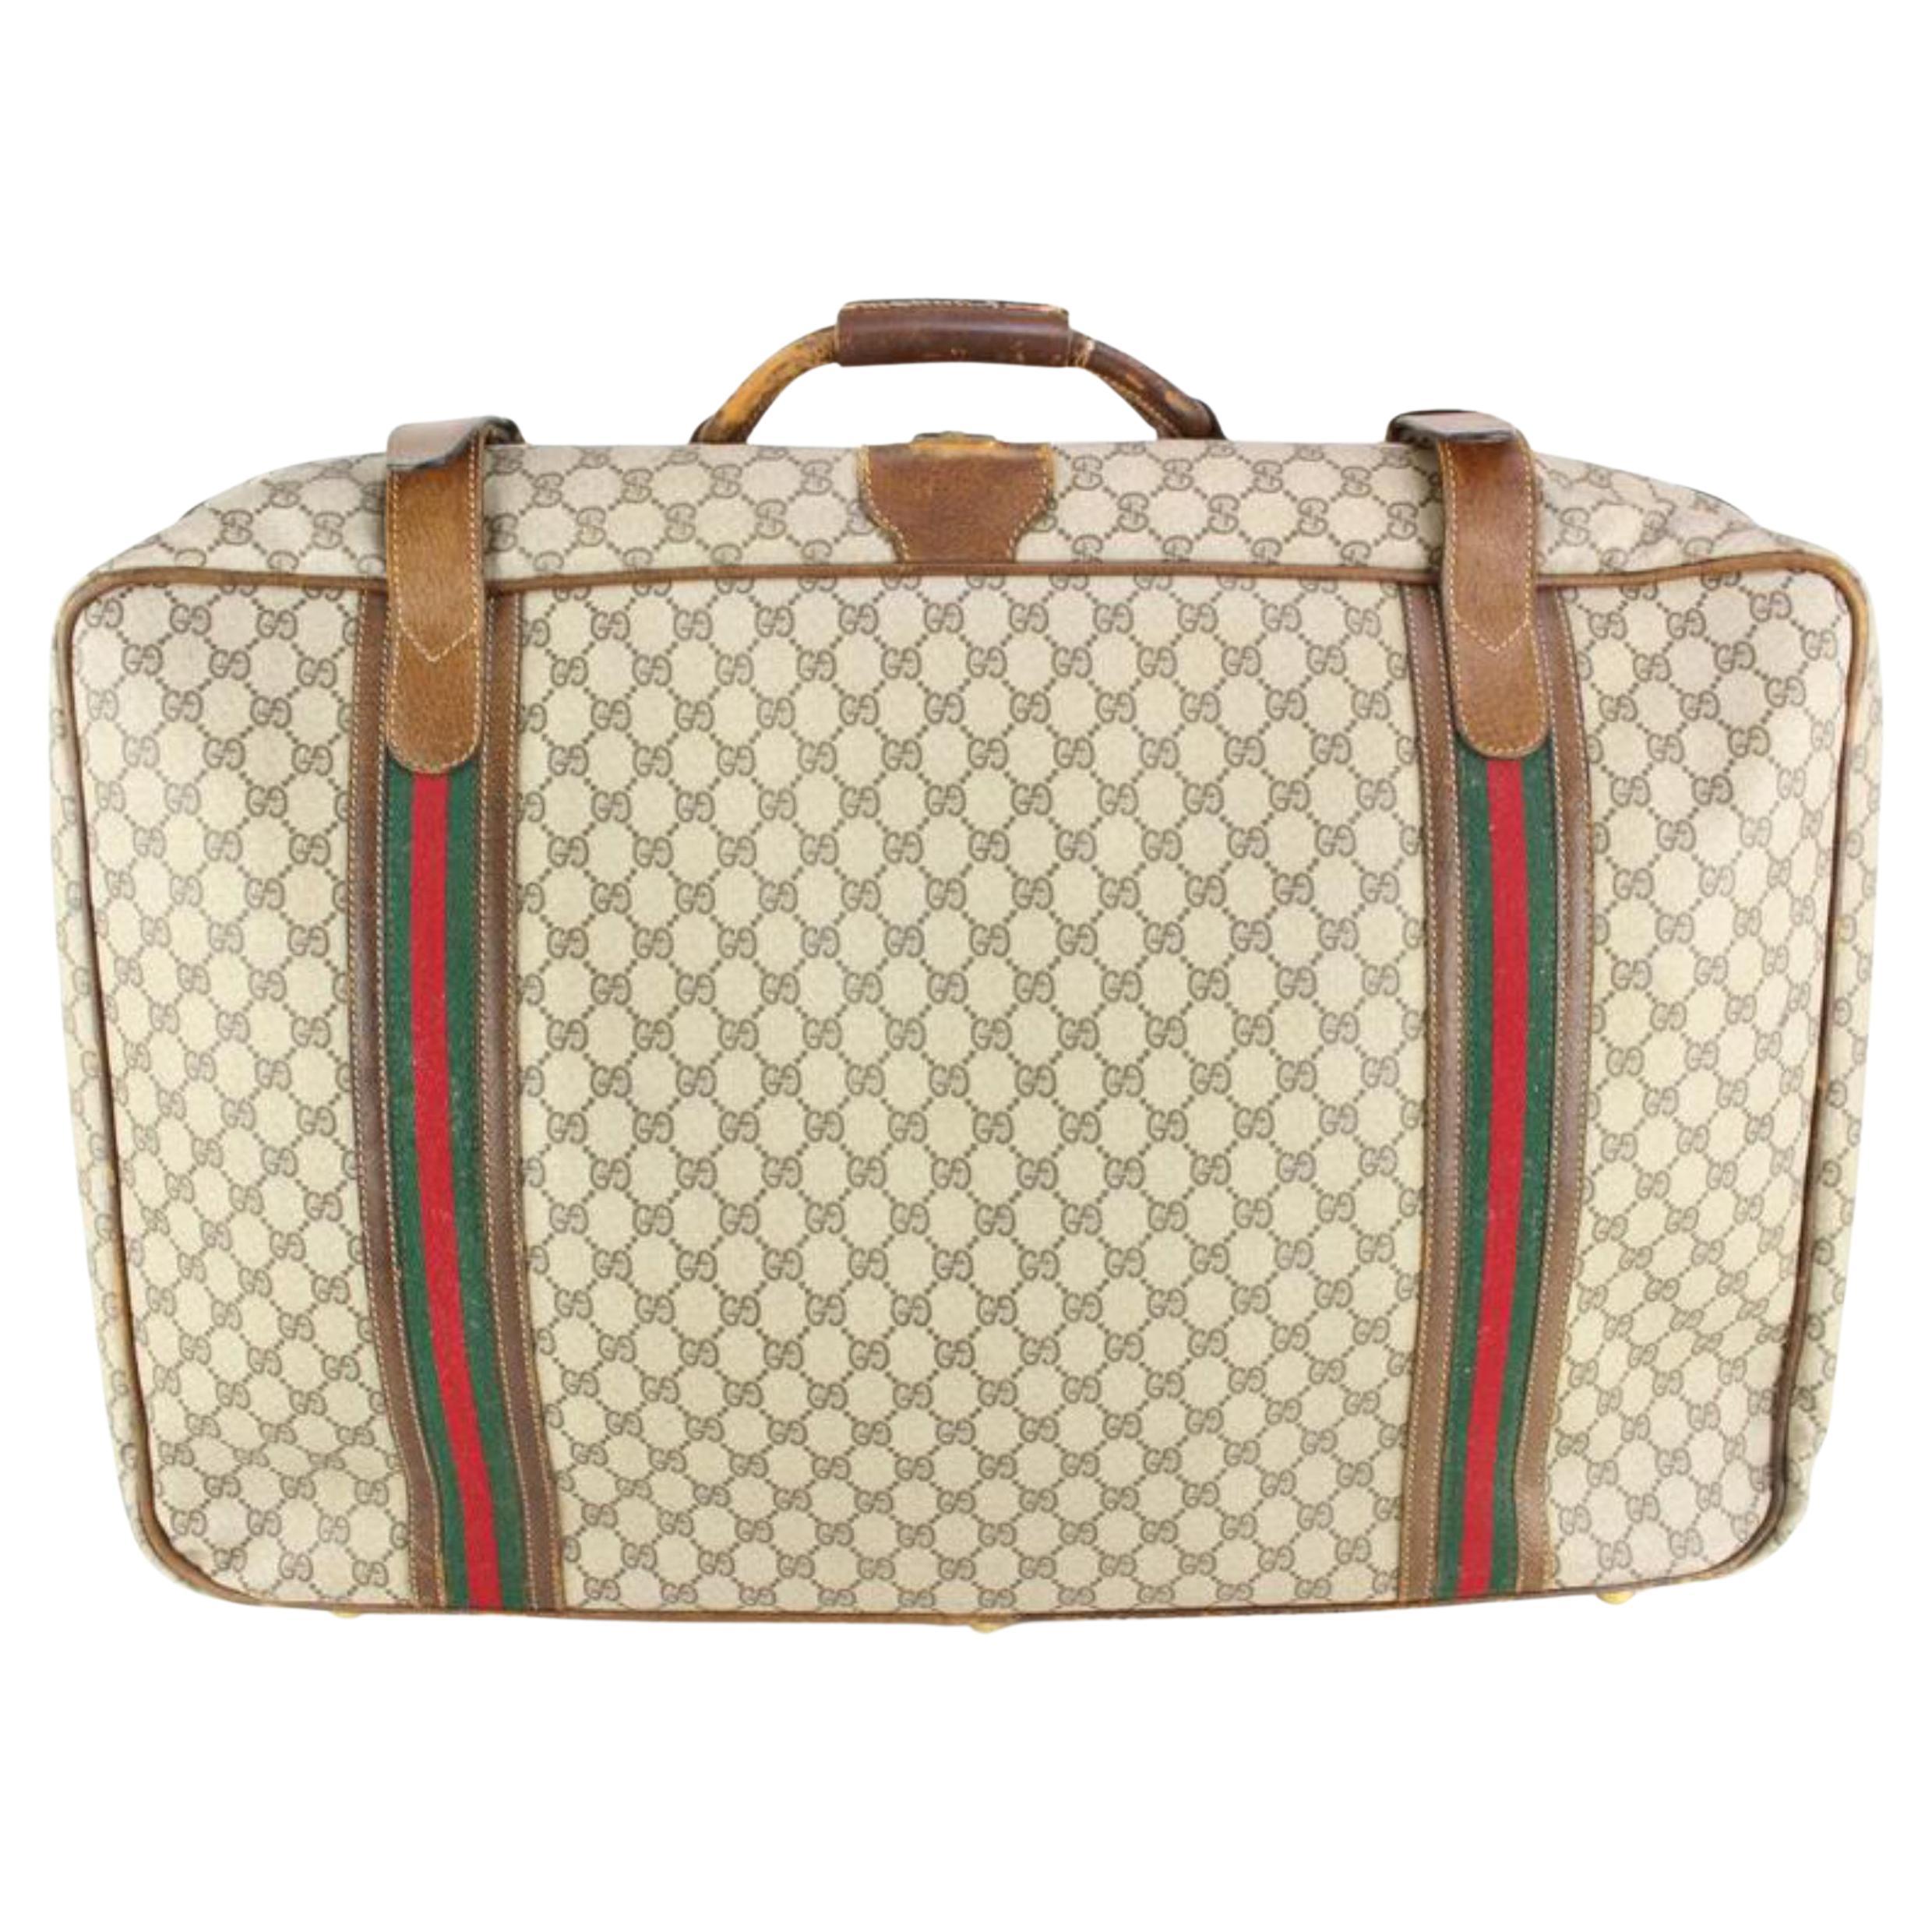 Gucci XL Supreme GG Monogram Web Suitcase Luggage Soft Trunk 62gz429s For Sale